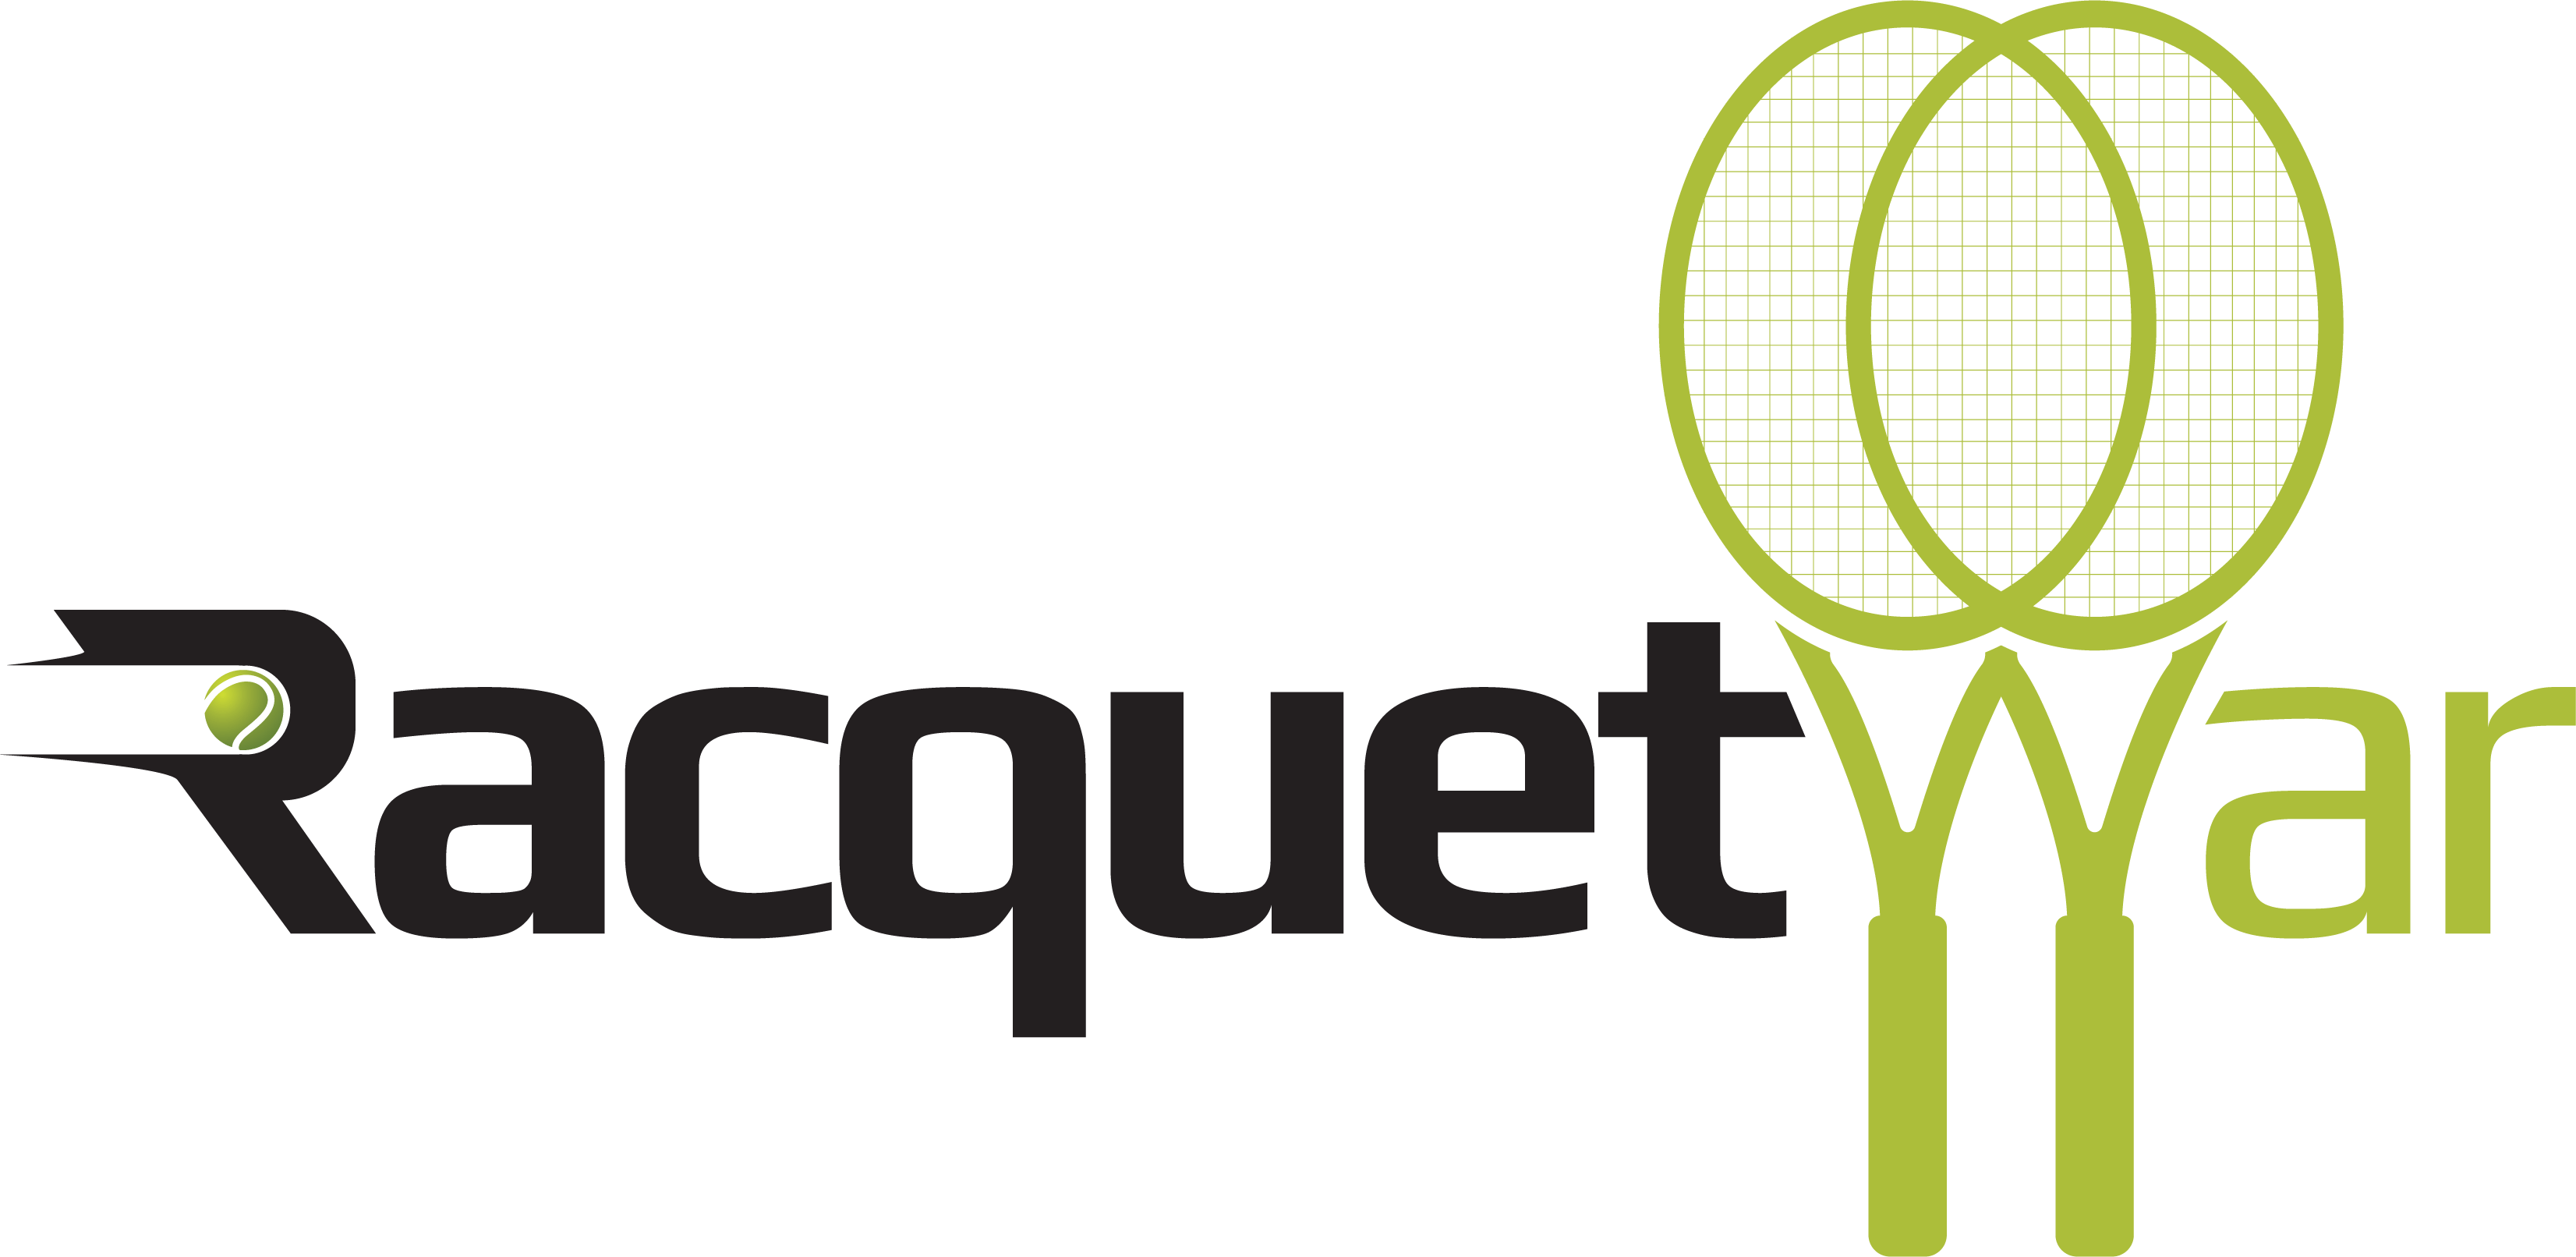 Tennis Racket Logo - Racquet War Competitive Tennis Tournaments for Adults